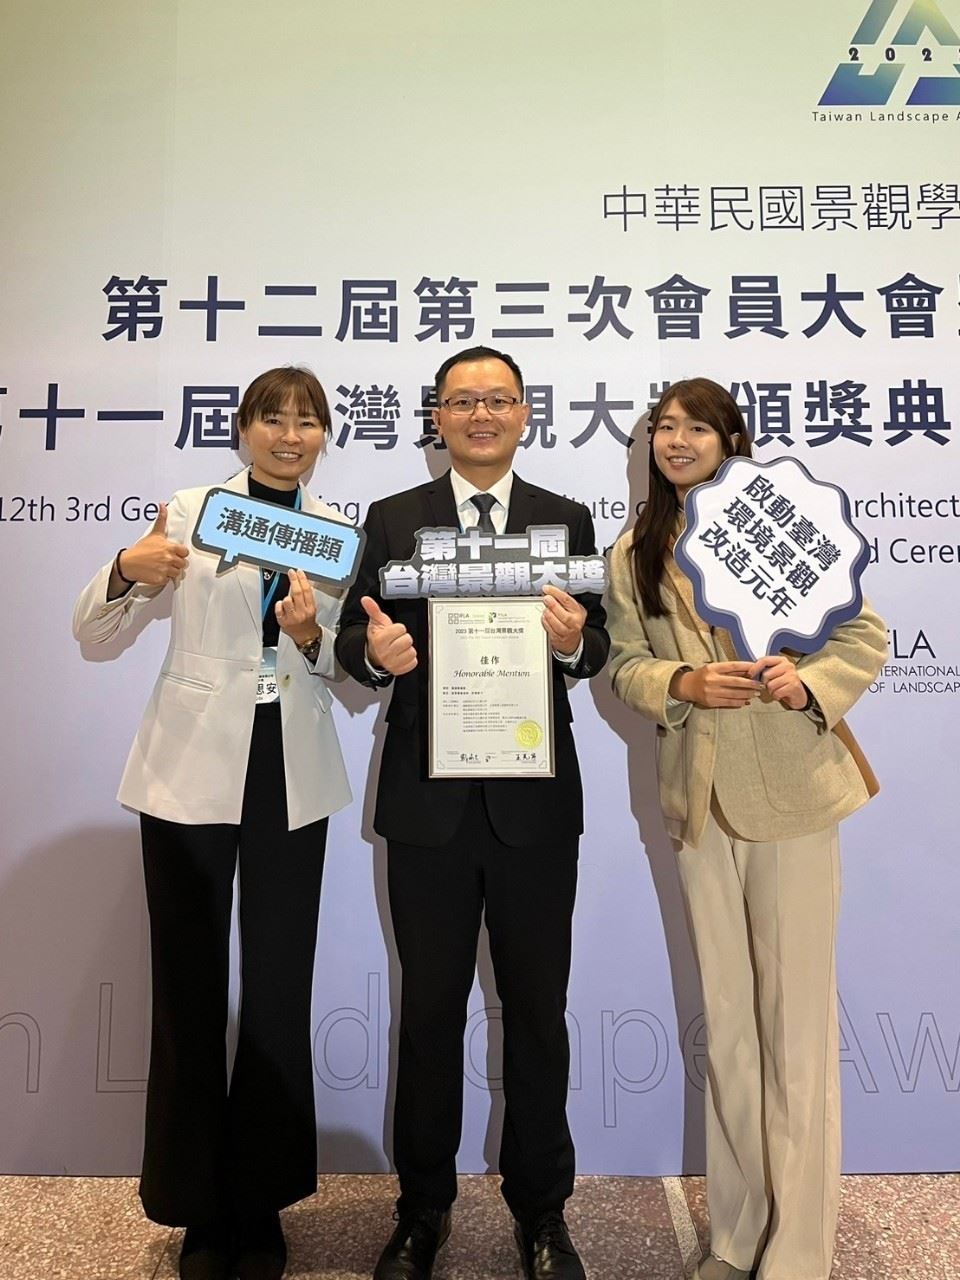 11th Taiwan Landscape Awards Group Photo